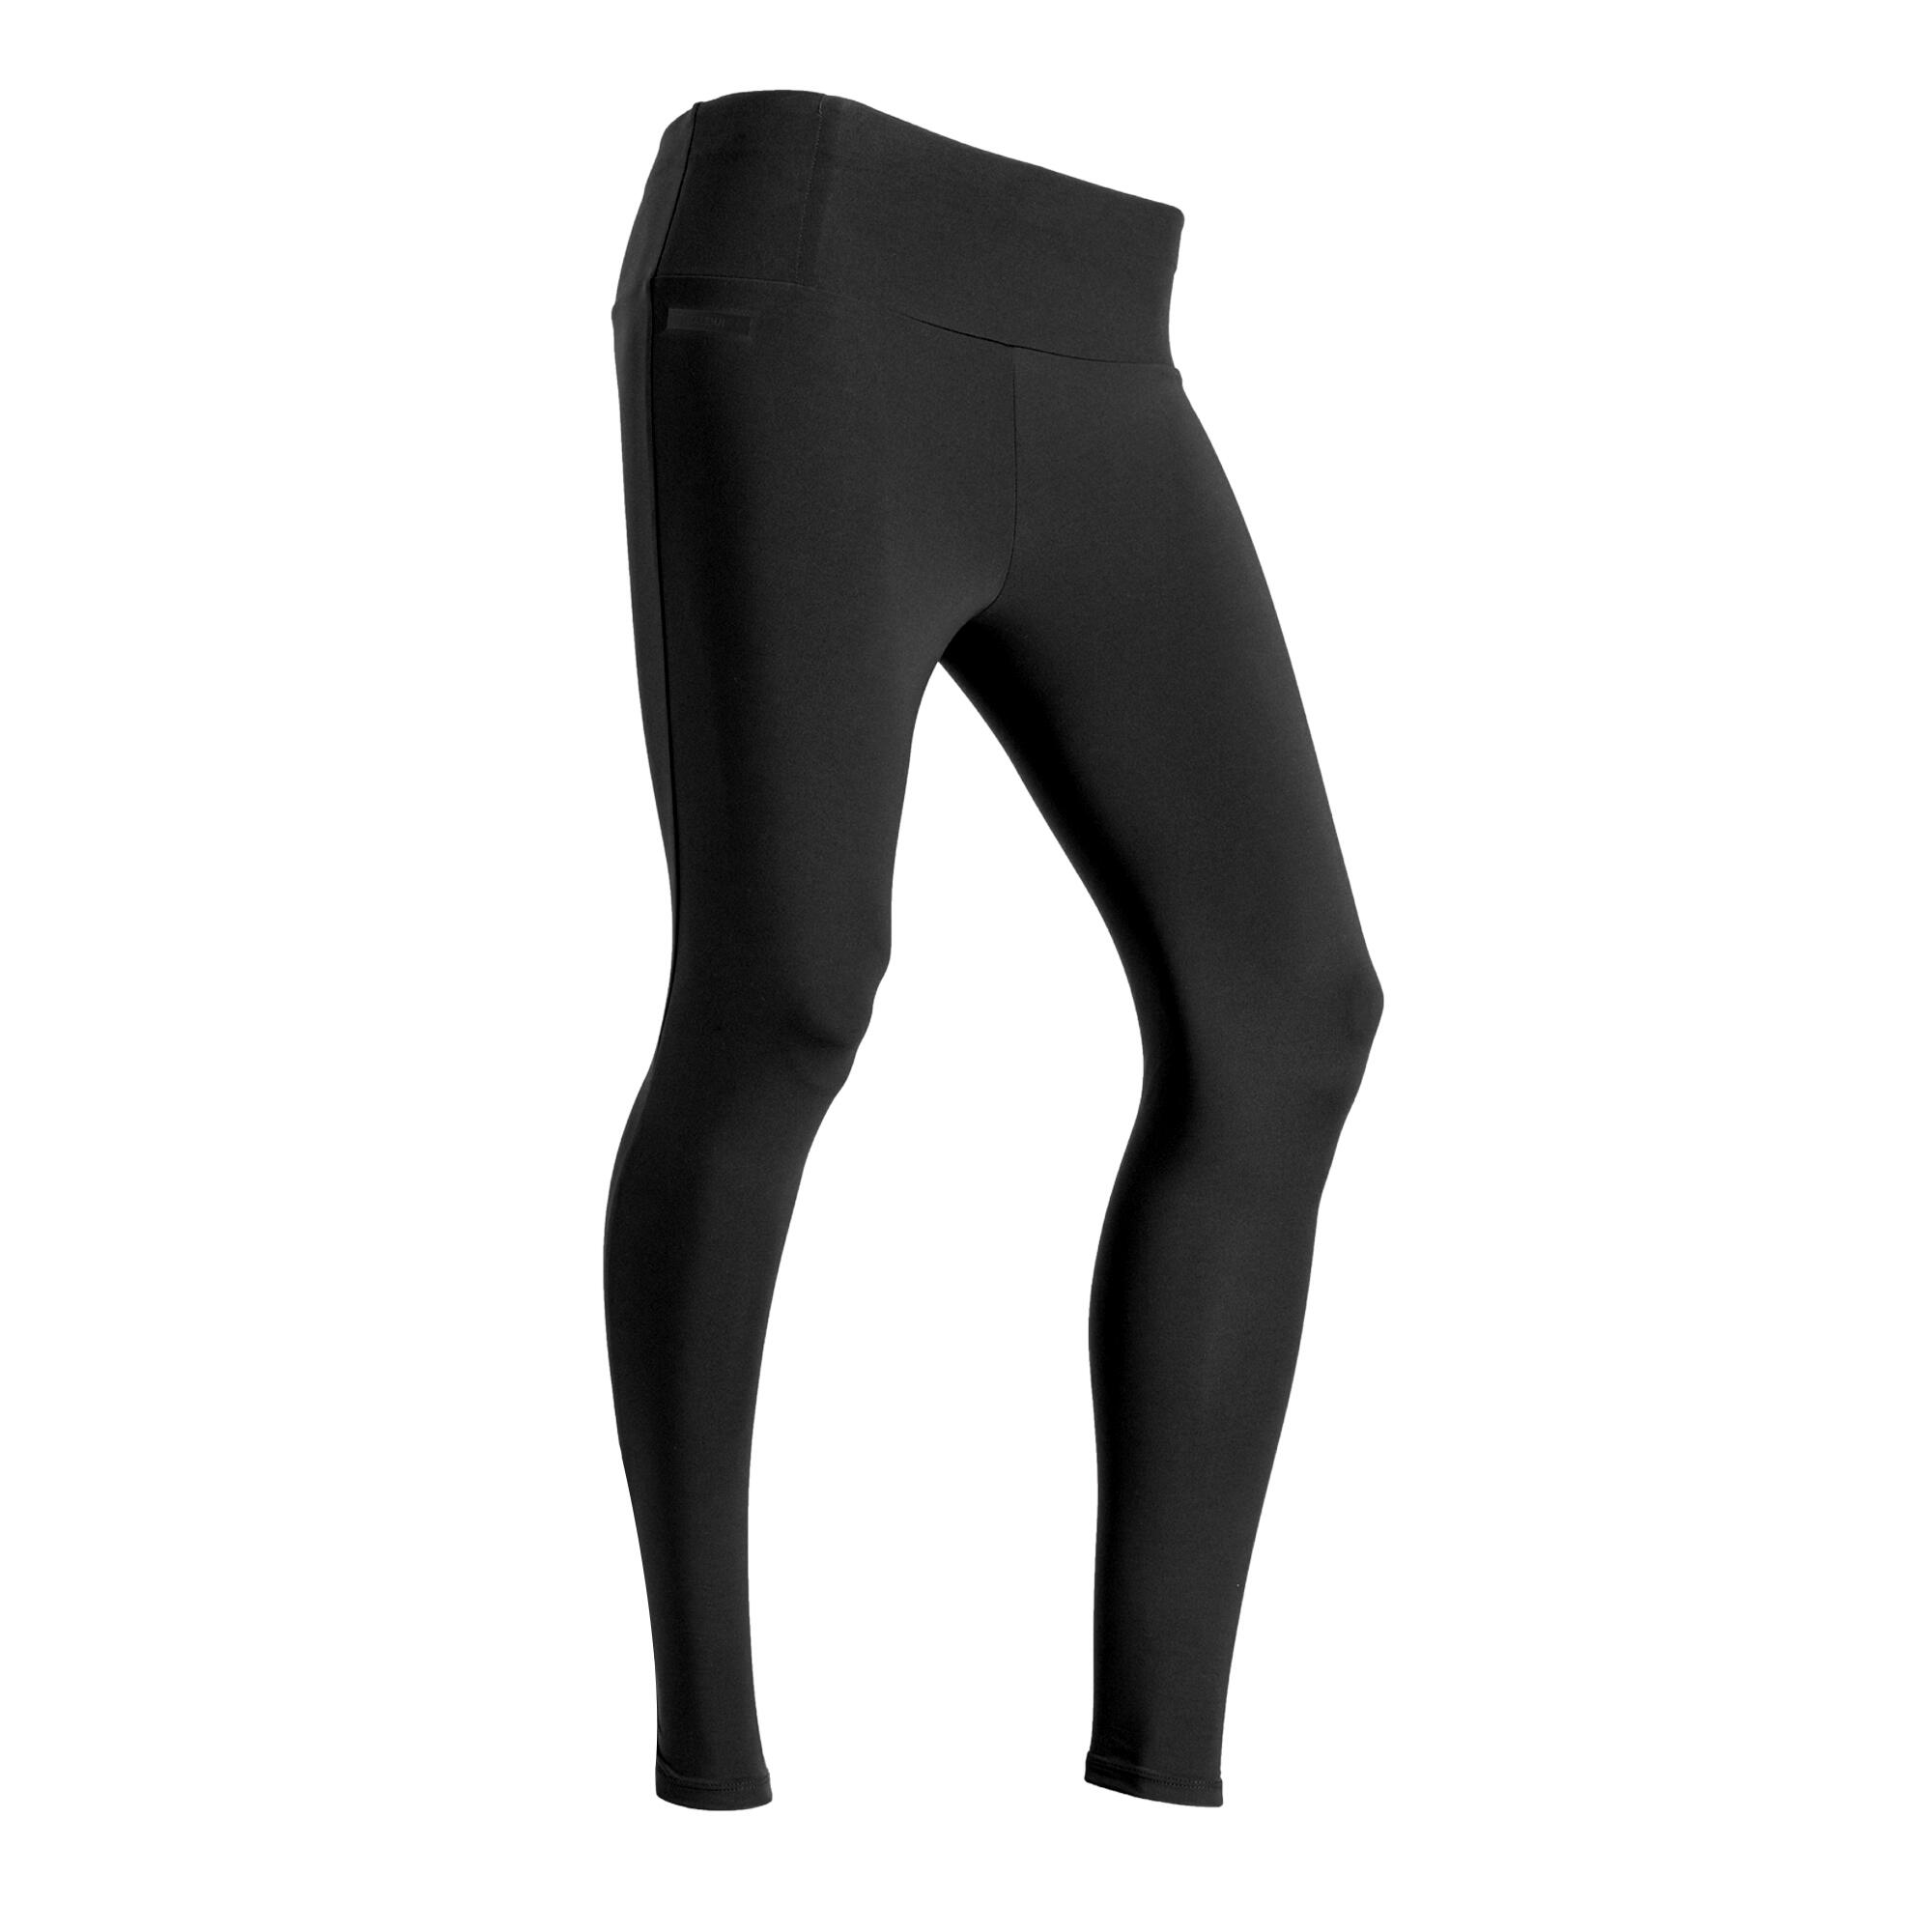 https://contents.mediadecathlon.com/p1982318/k$75ccb440b49ceb46ded9e14ff4a1e31a/women-s-running-leggings-with-body-sculpting-xs-to-5xl-large-size-black-kalenji-8554240.jpg